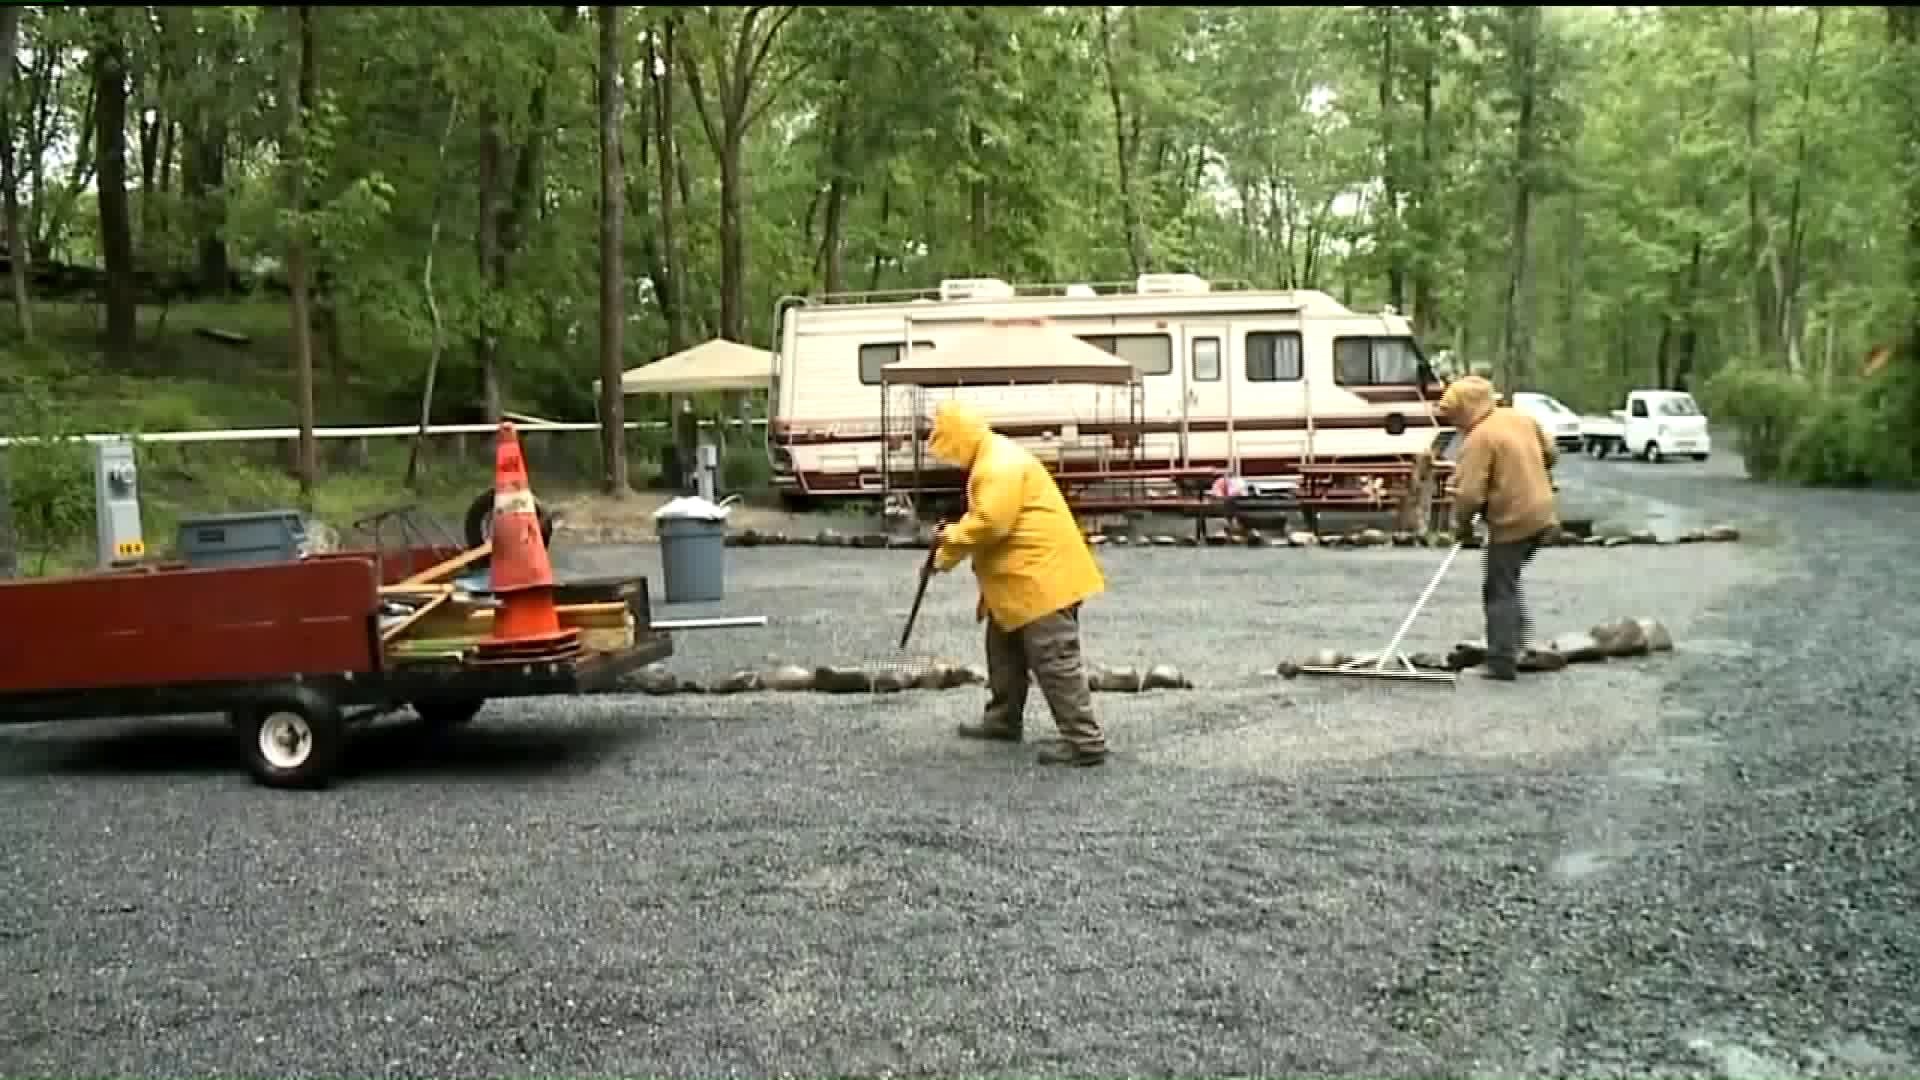 Rain No Match for Memorial Day Campsite Preps in the Poconos